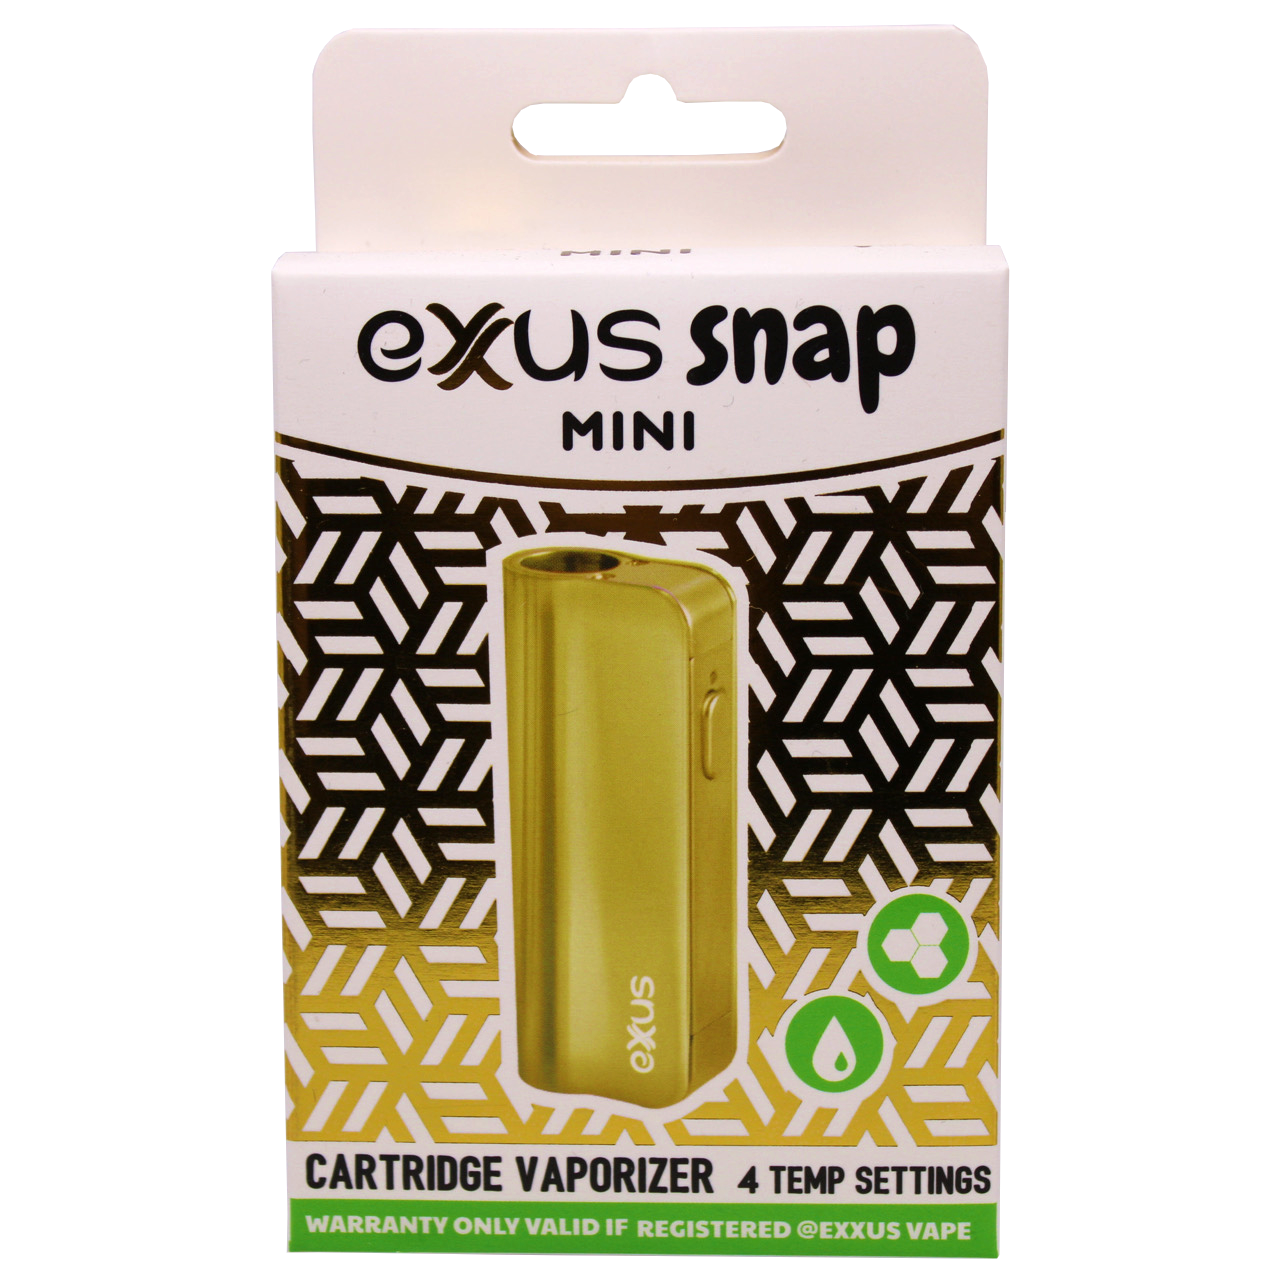 Exxus Snap VV Mini Cartridge Vaporizer